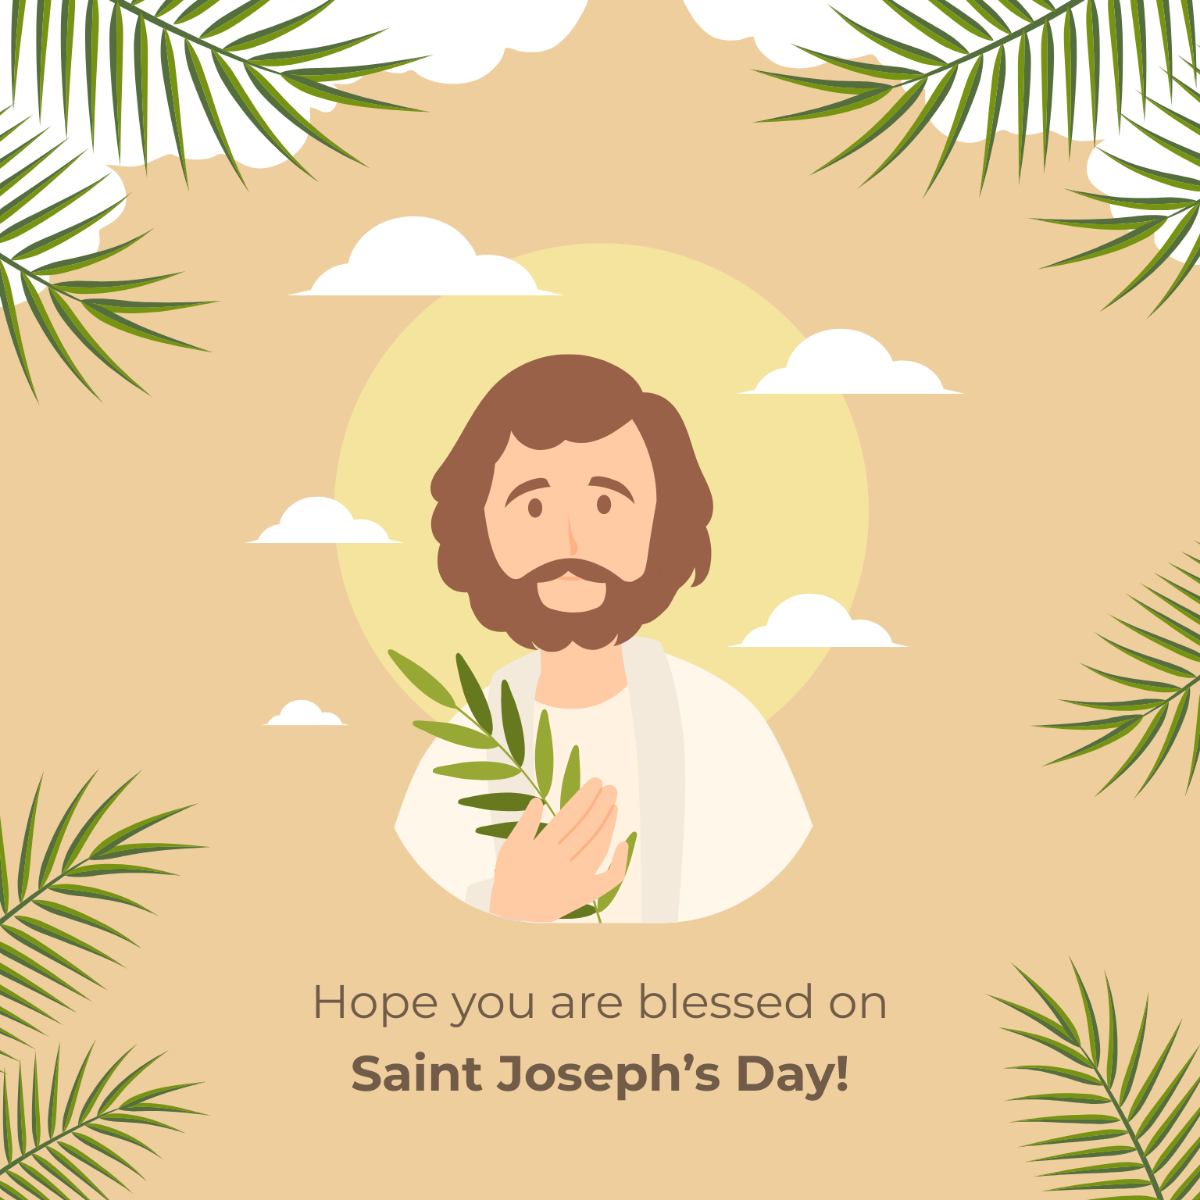 Saint Joseph's Day Greeting Card Vector